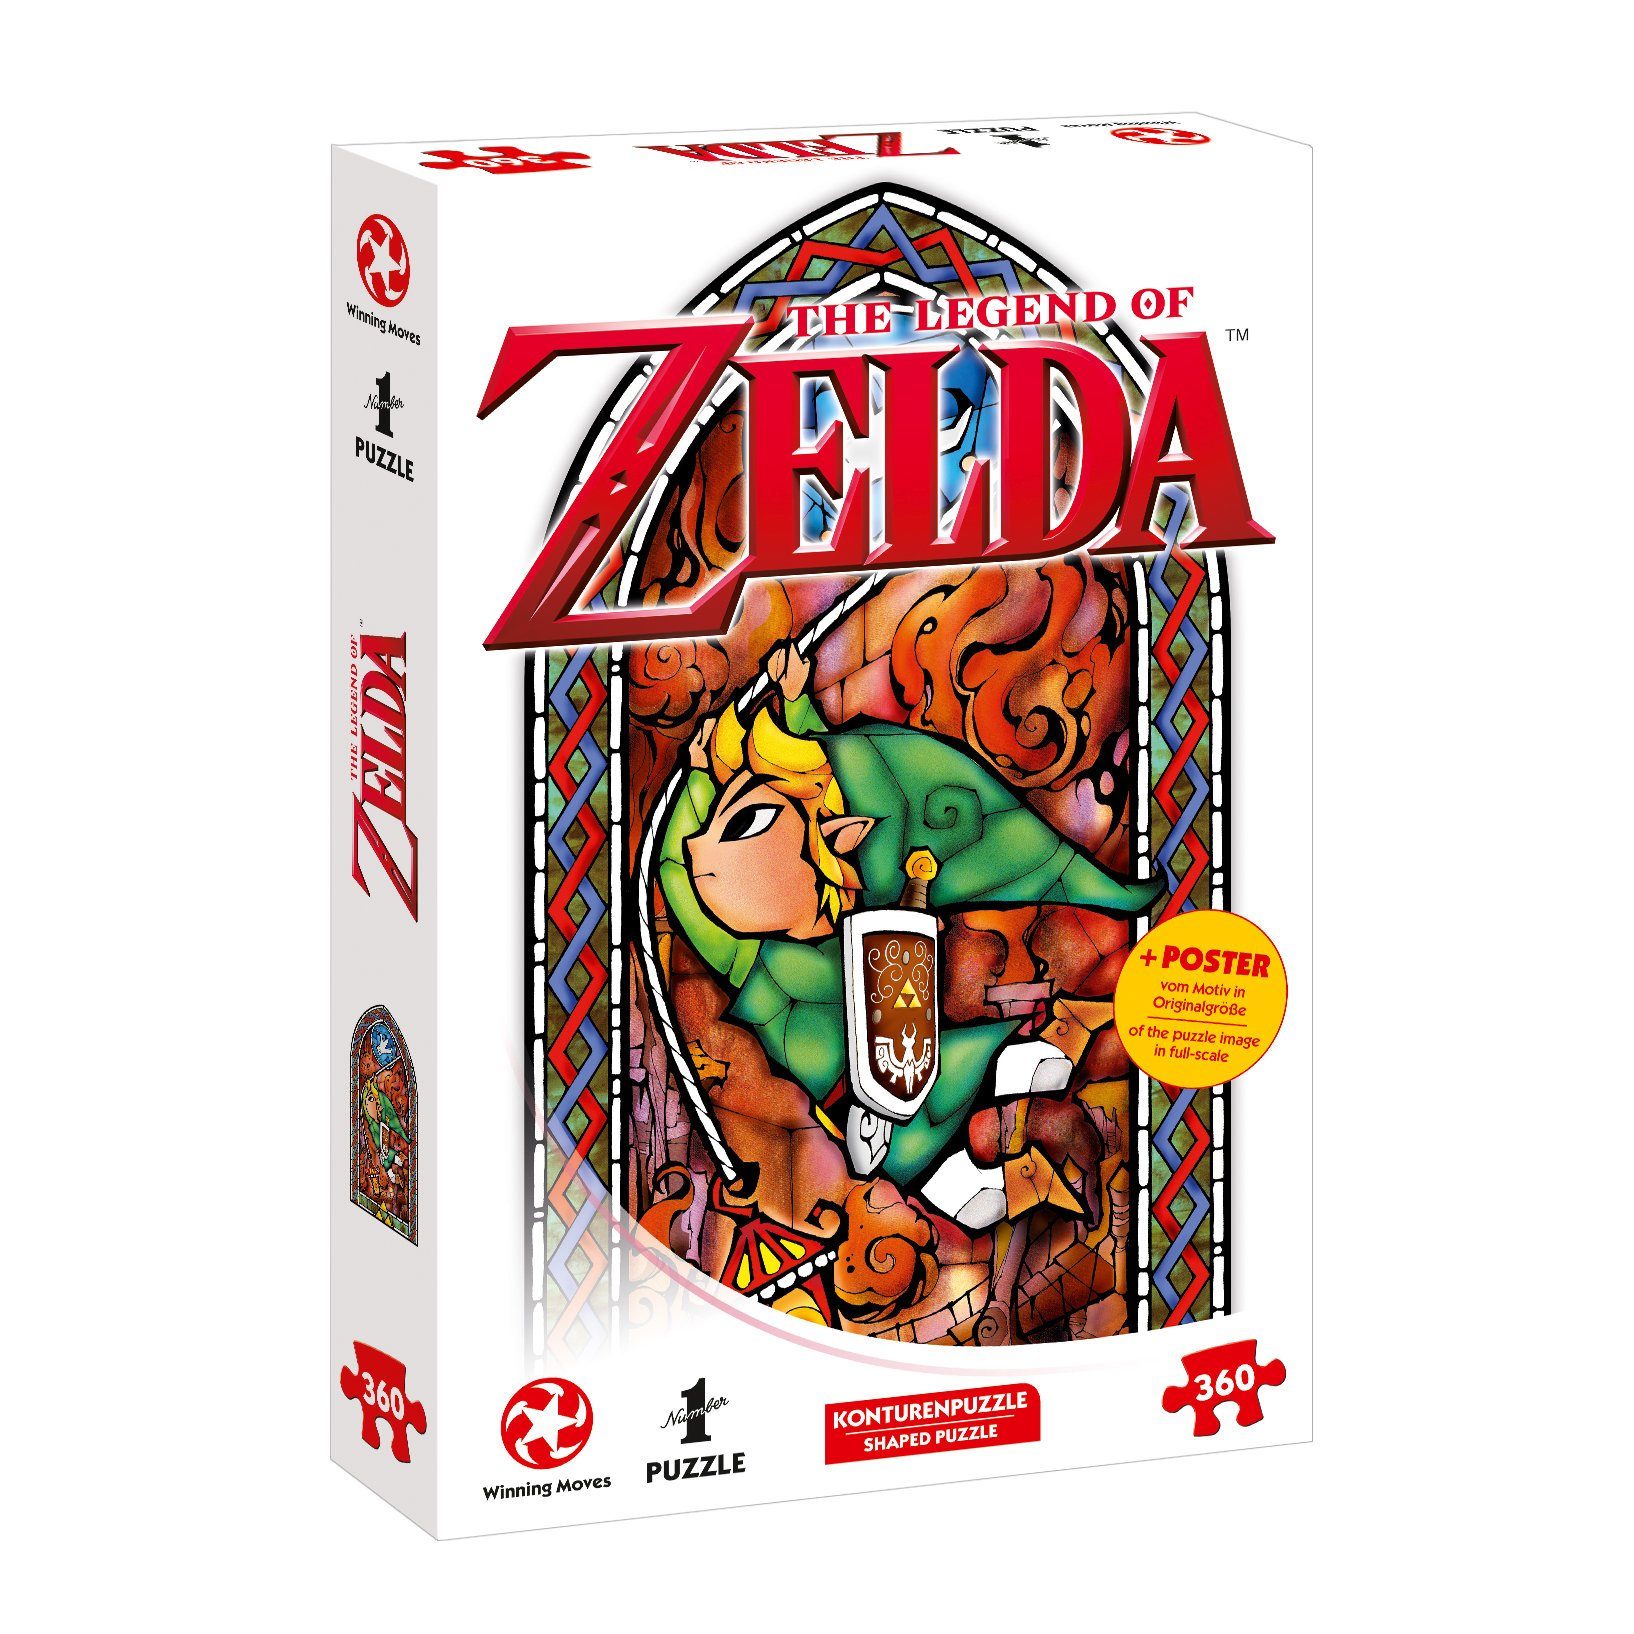 Puzzle 360 Link-Adventurer Puzzle Puzzleteile Winning Zelda Moves Teile, 360